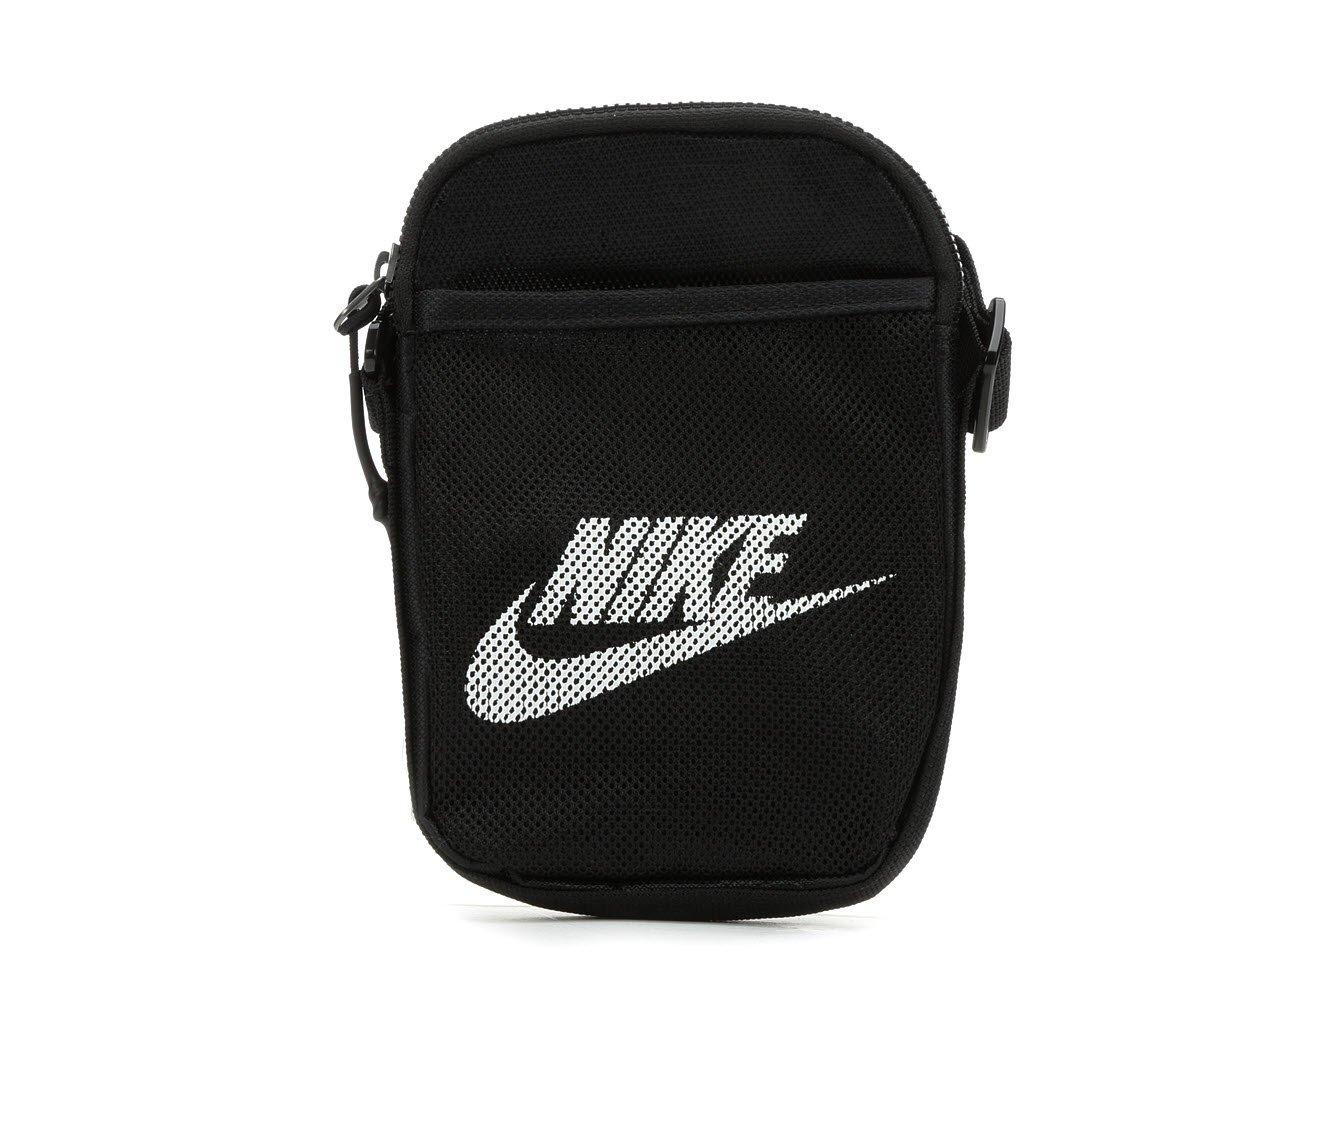 Nike Heritage Hip Pack Hip Gym Sack Bag Crossbody Travel Black CK7914 010  NEW